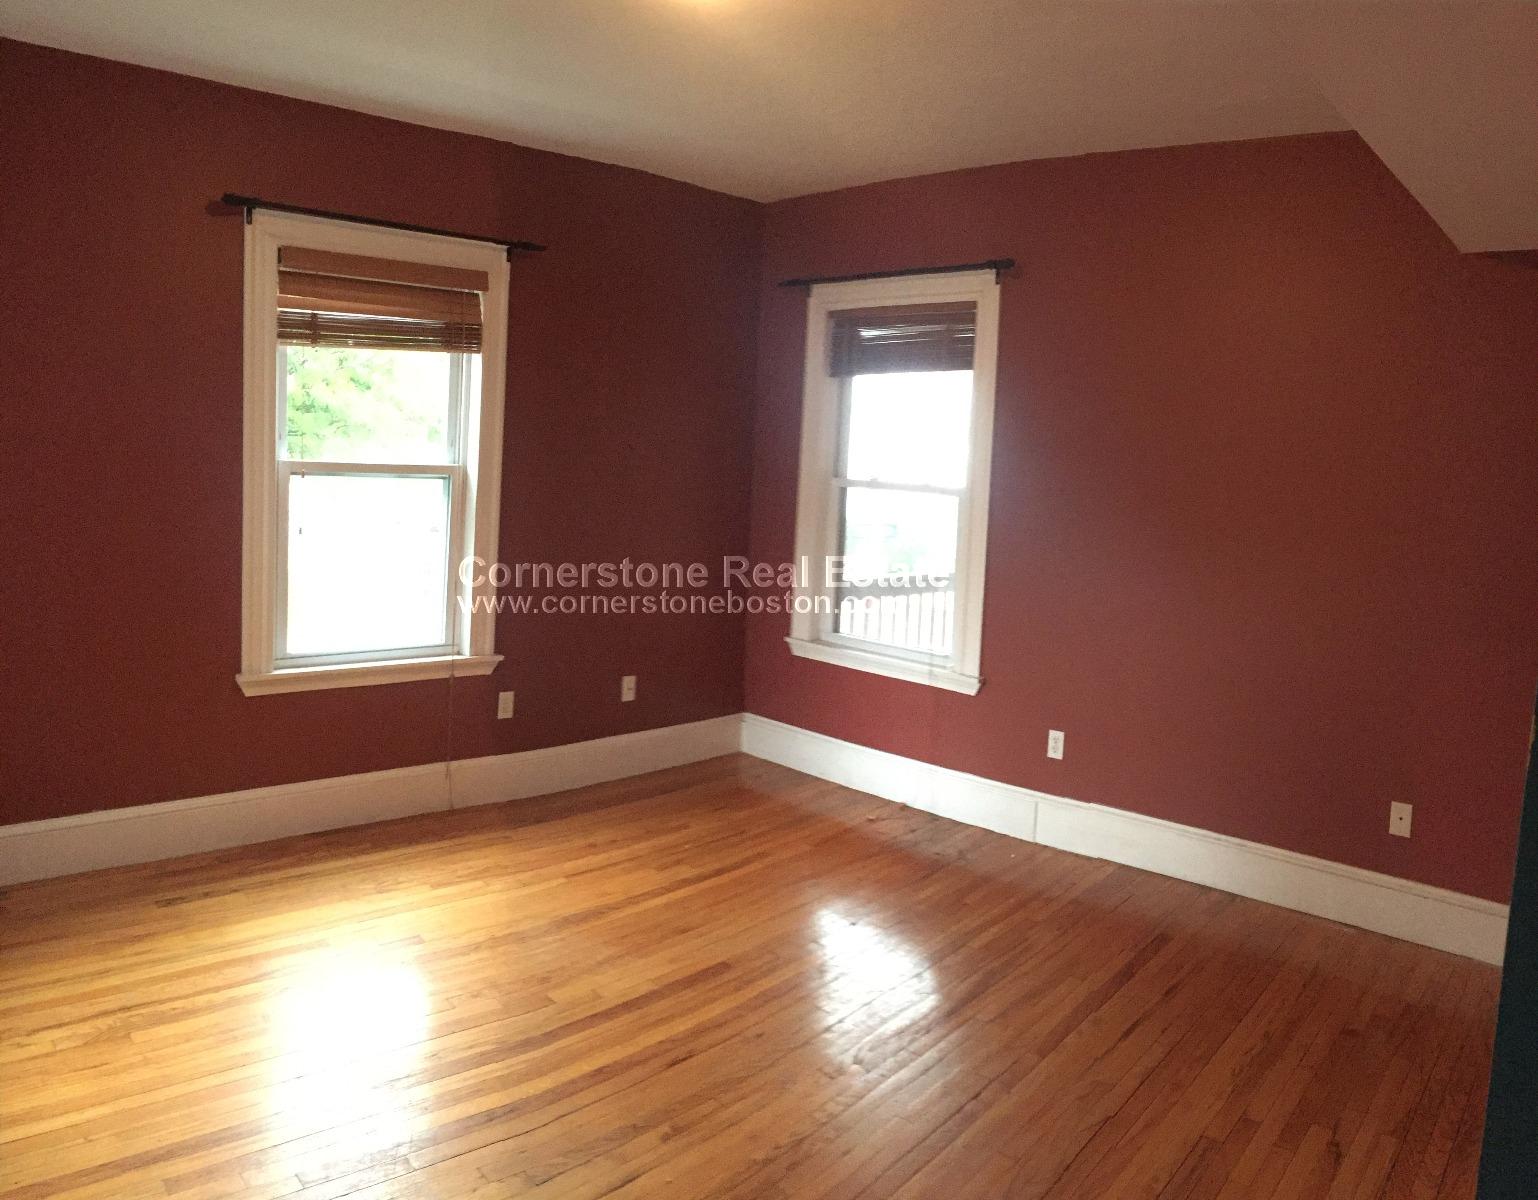 Photos of apartment on Medford St.,Malden MA 02148